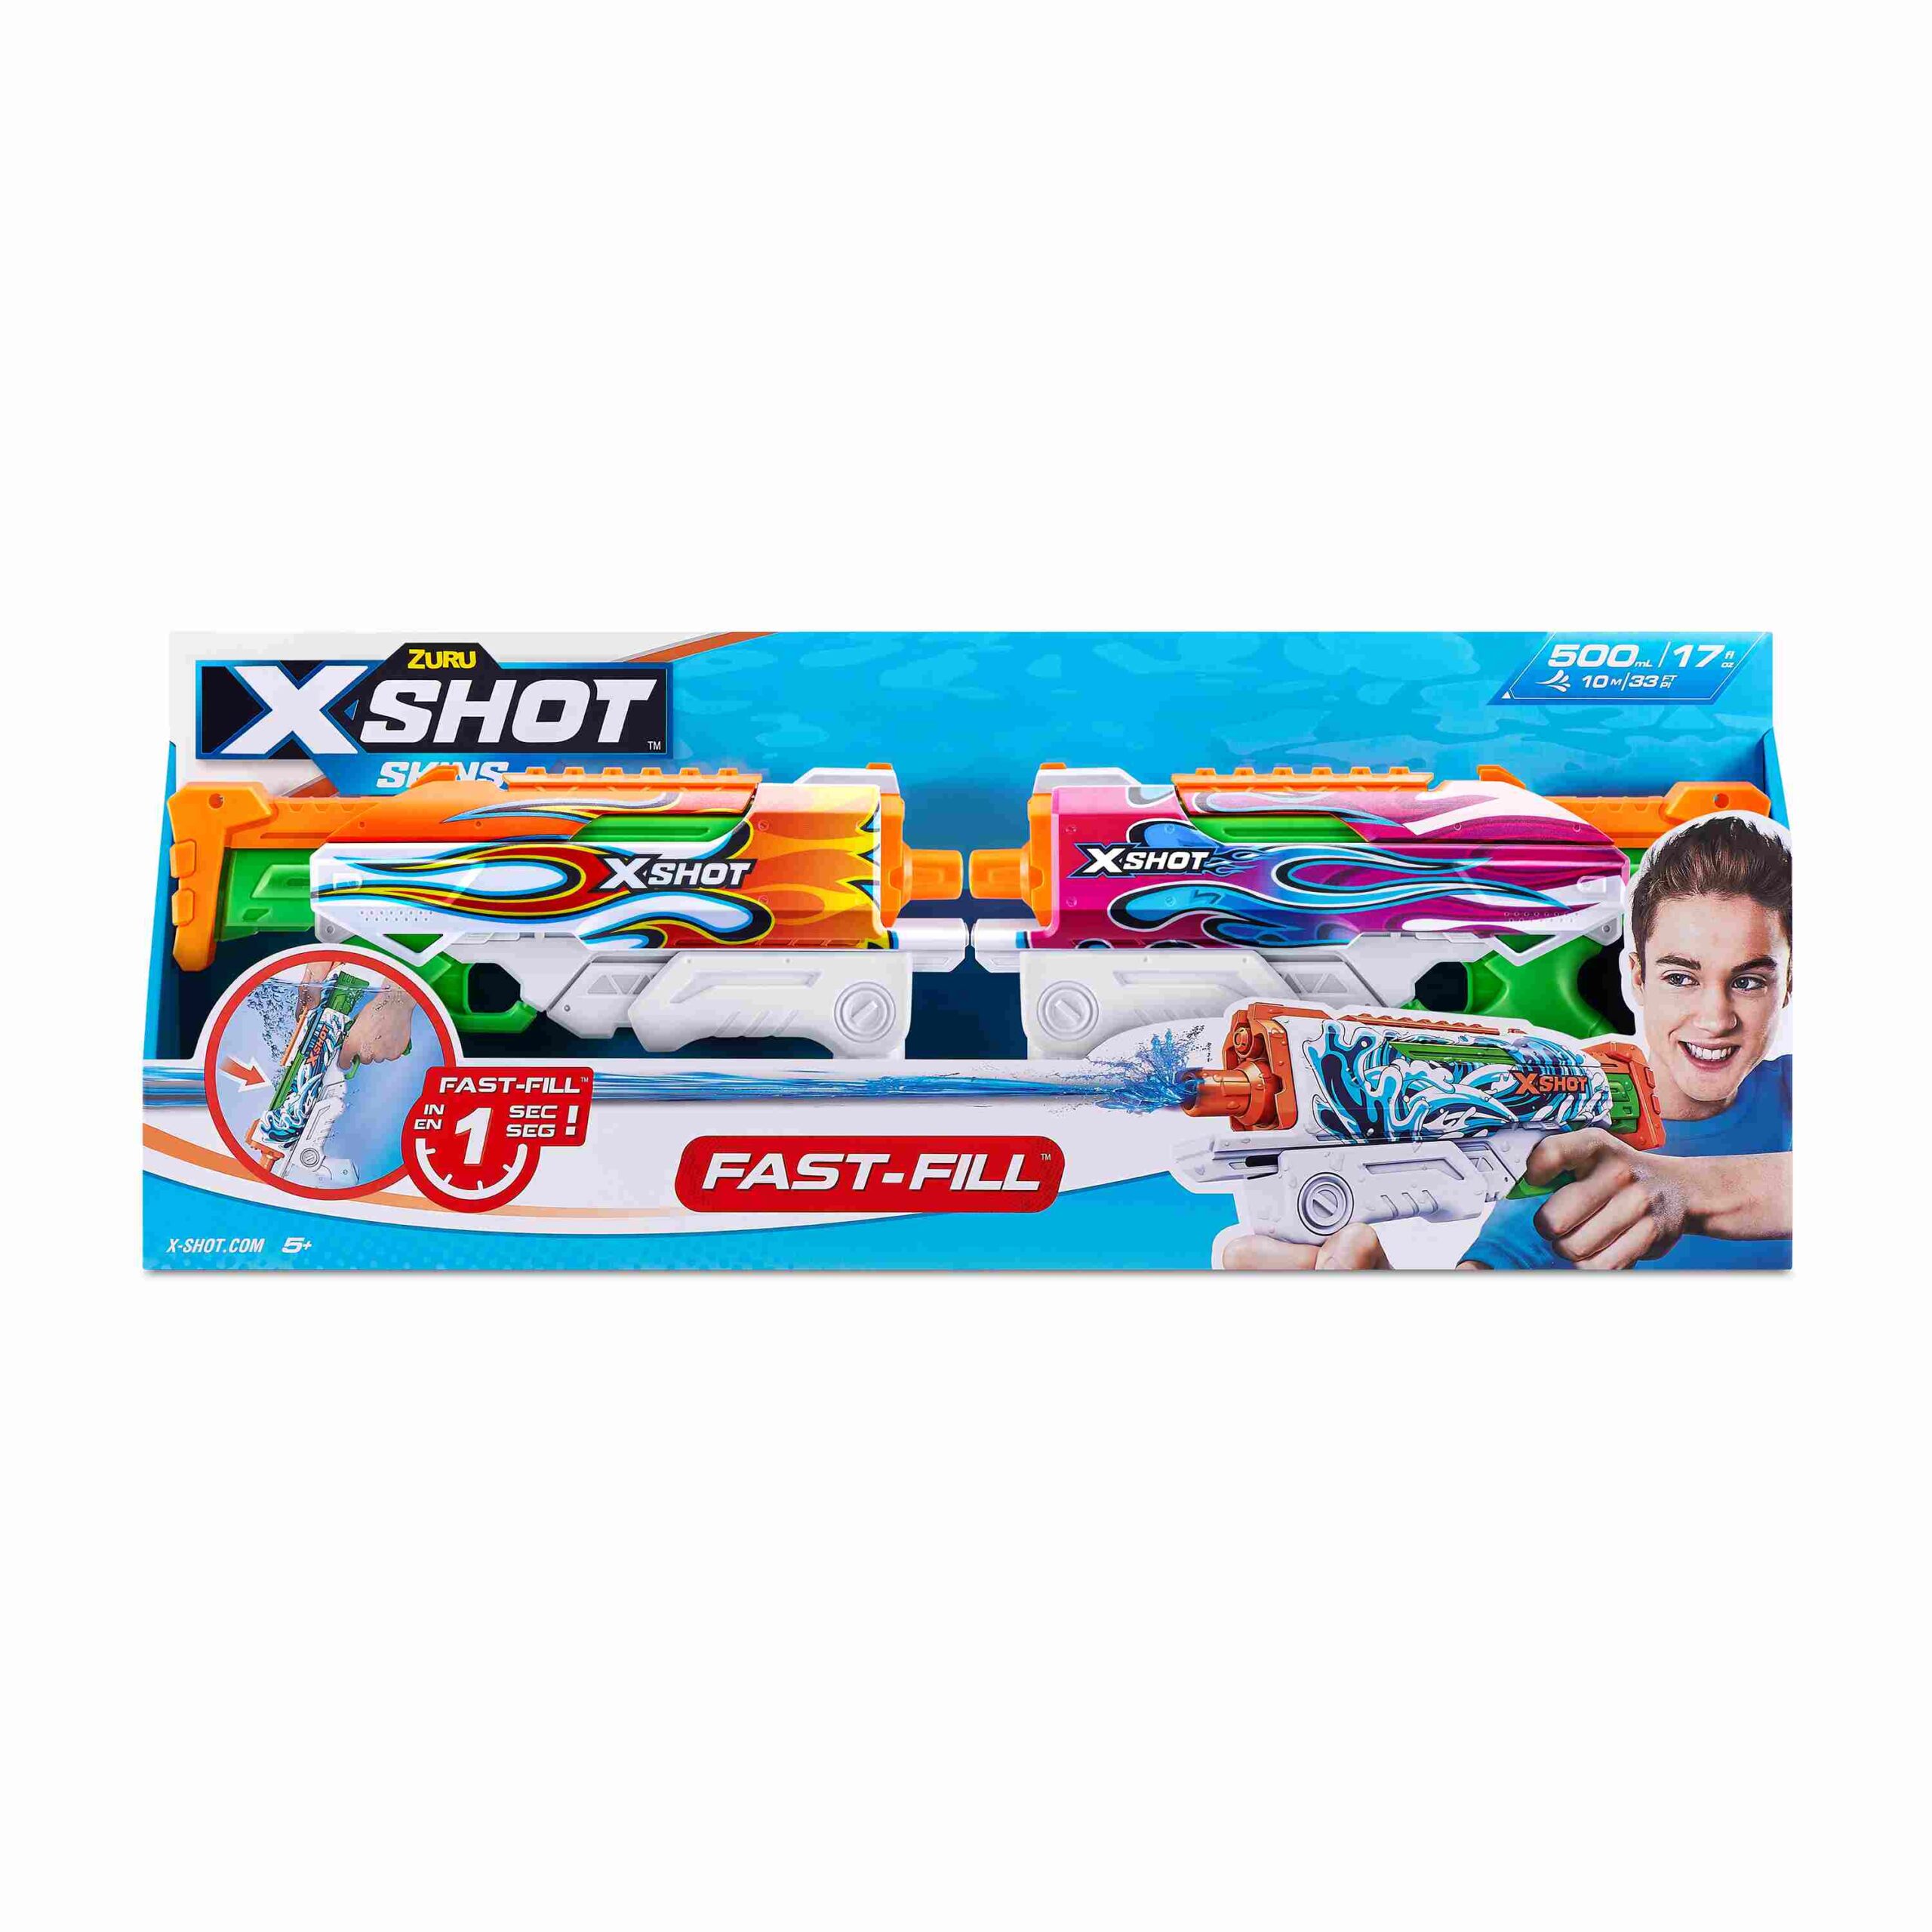 X-shot fast fill skins bi pack - X-SHOT